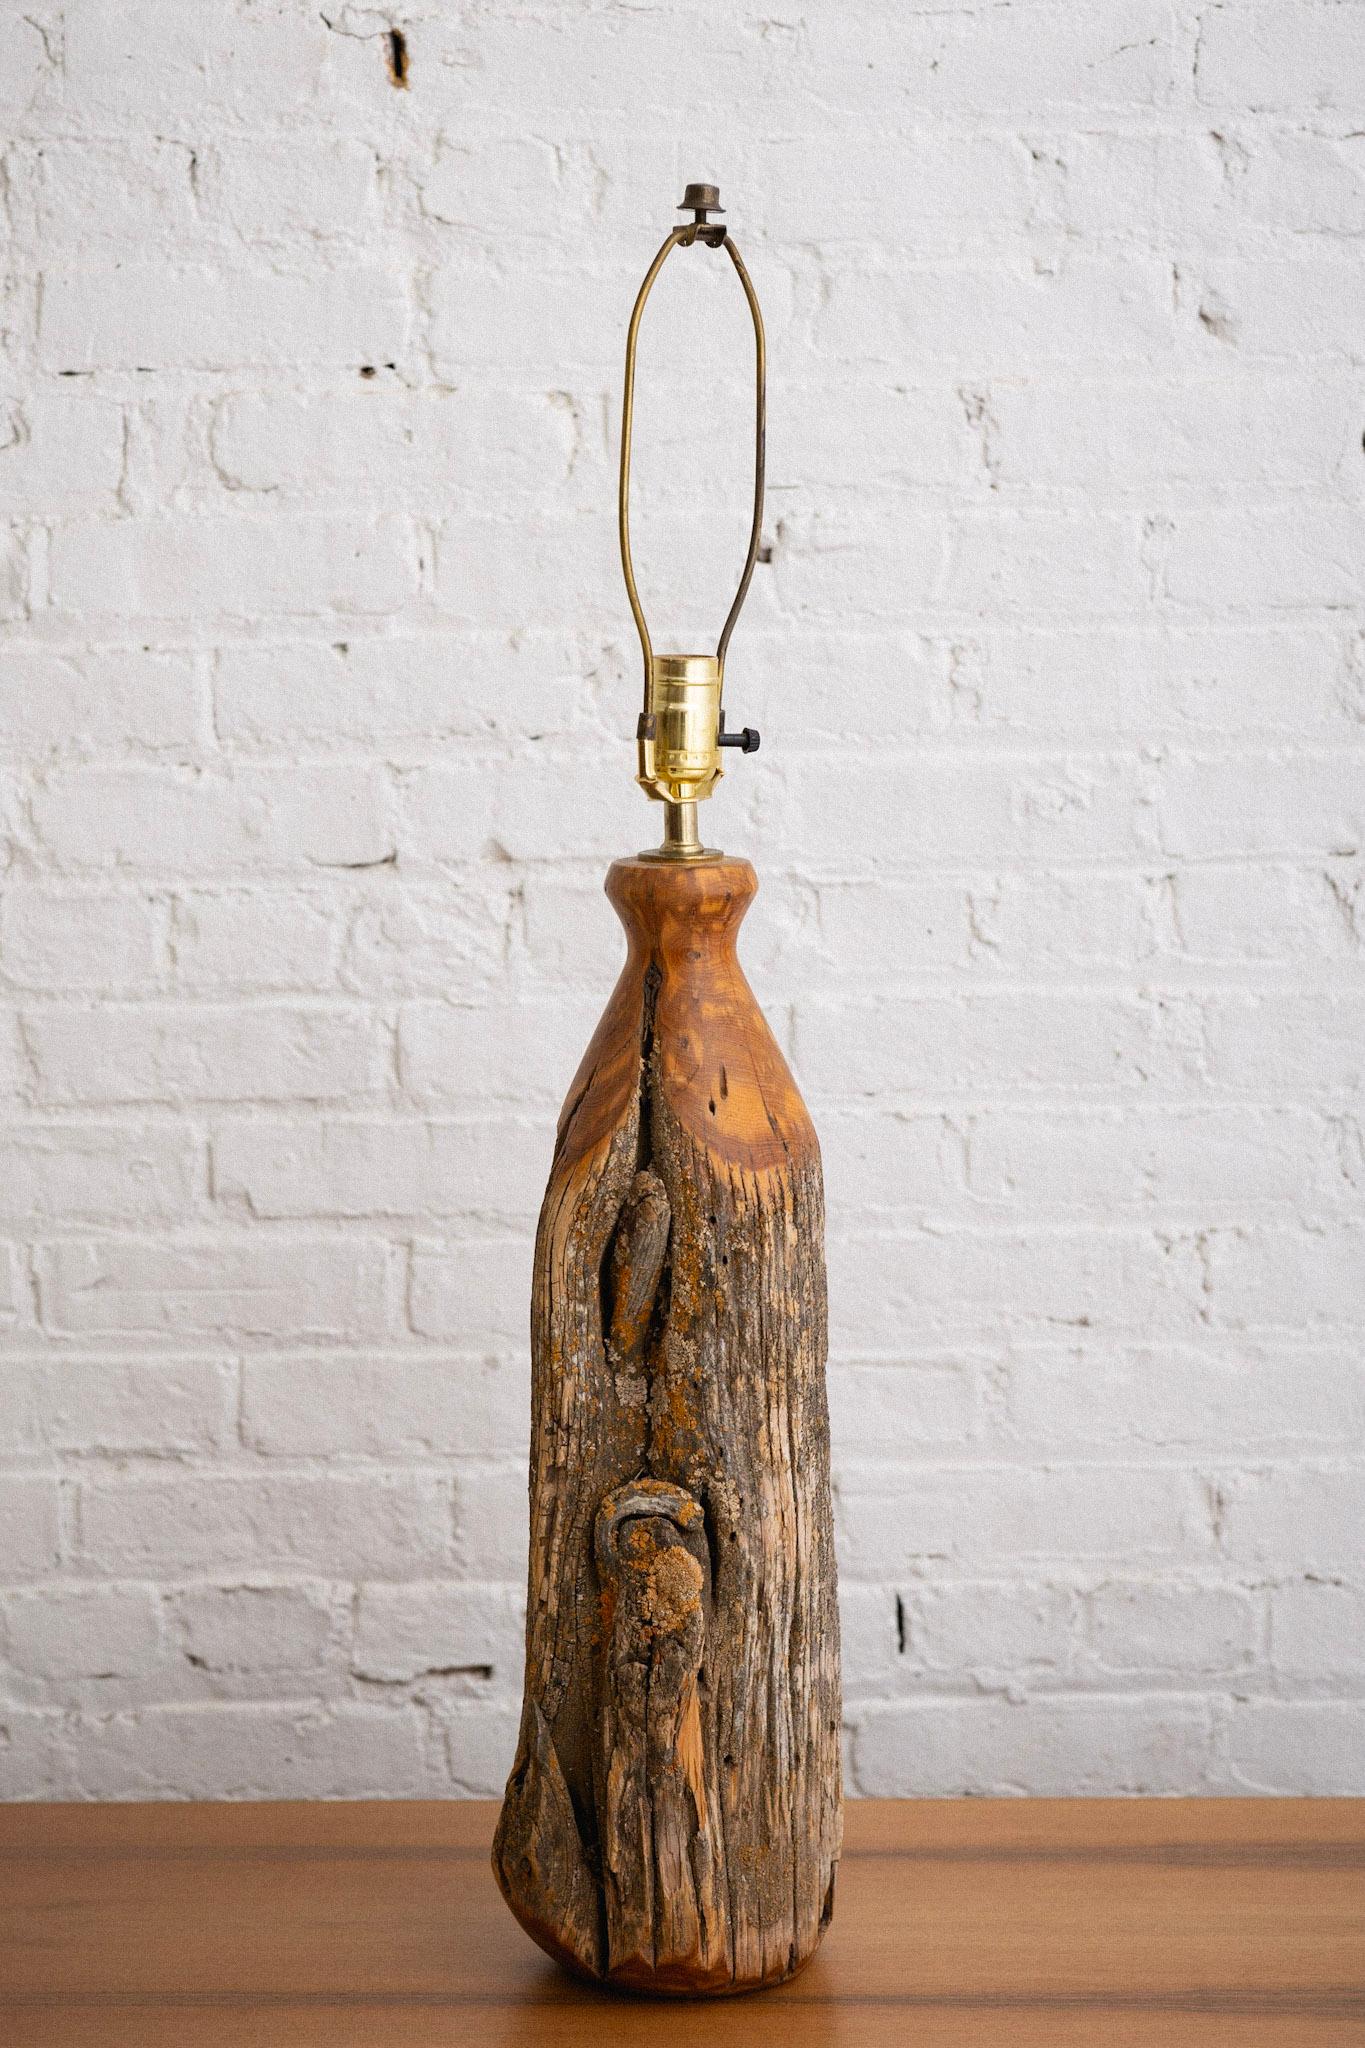 American Studio Made Live Edge Wood Lamp